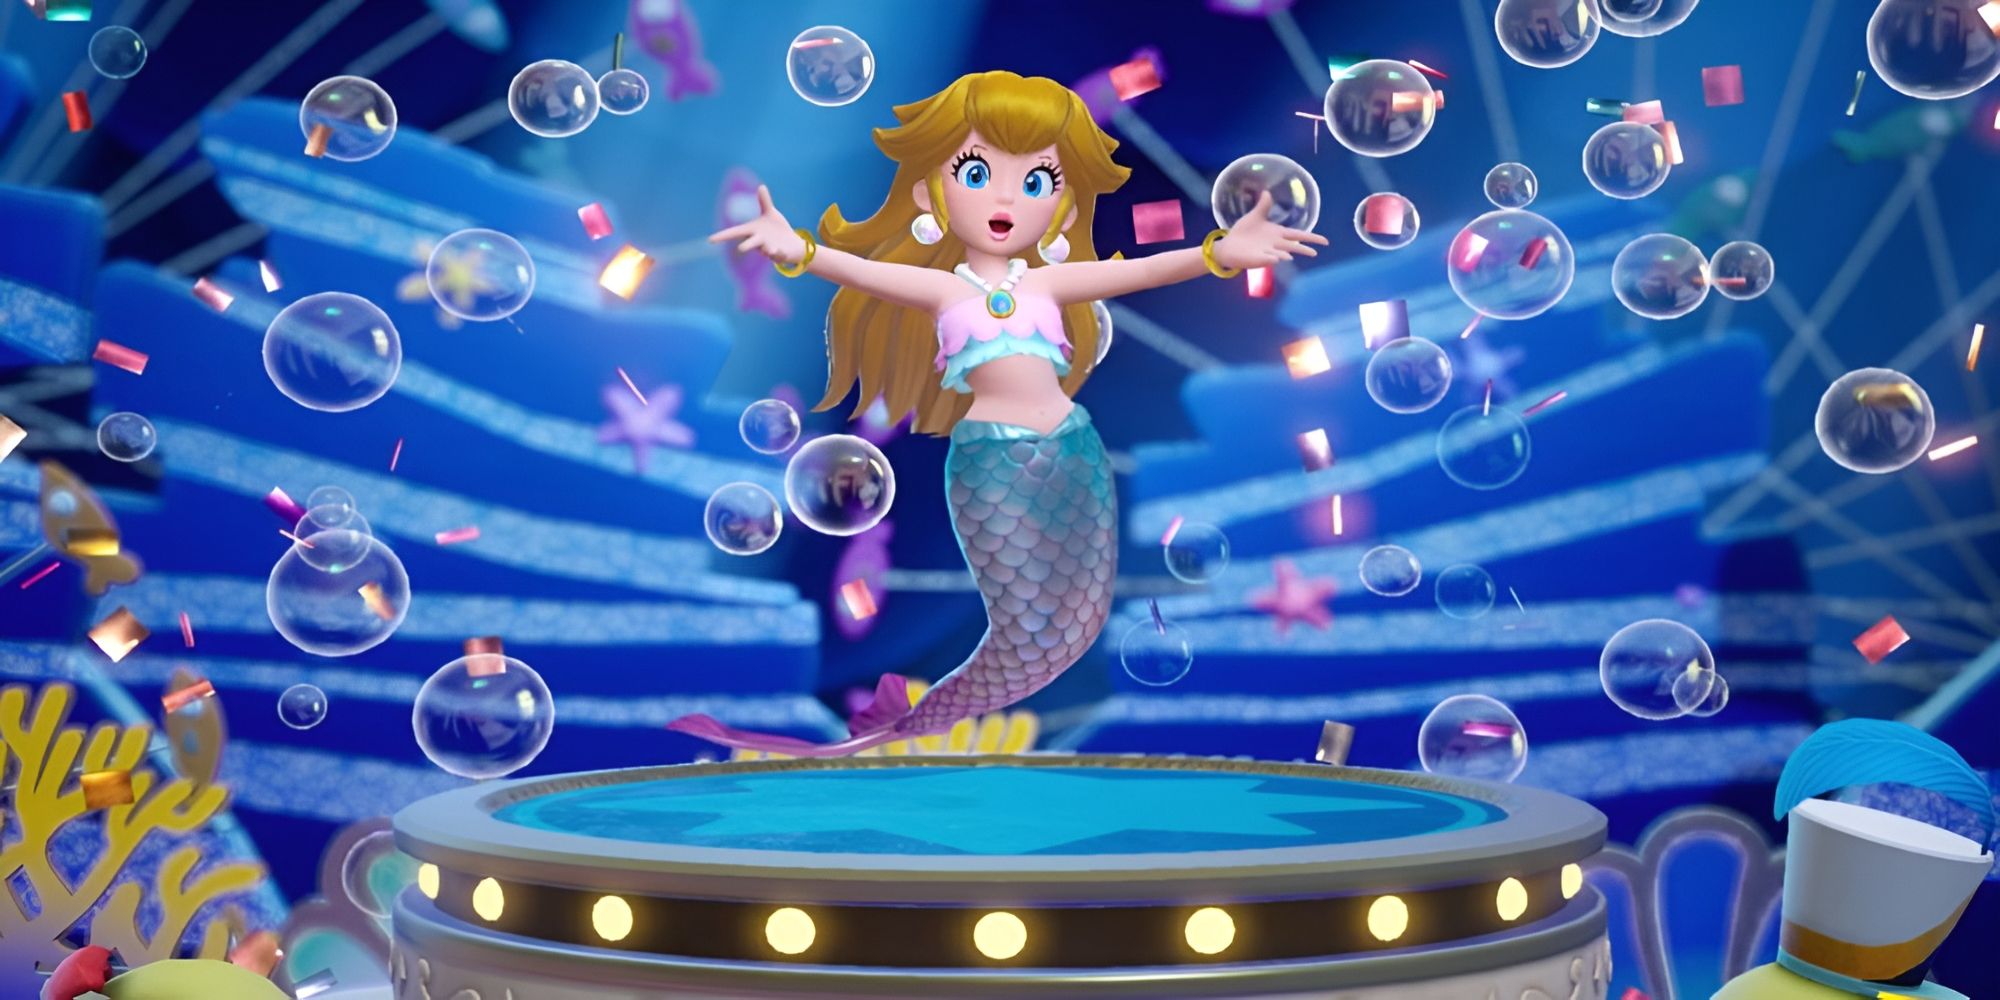 peach mermaid transformation in peach showtime game completion screen